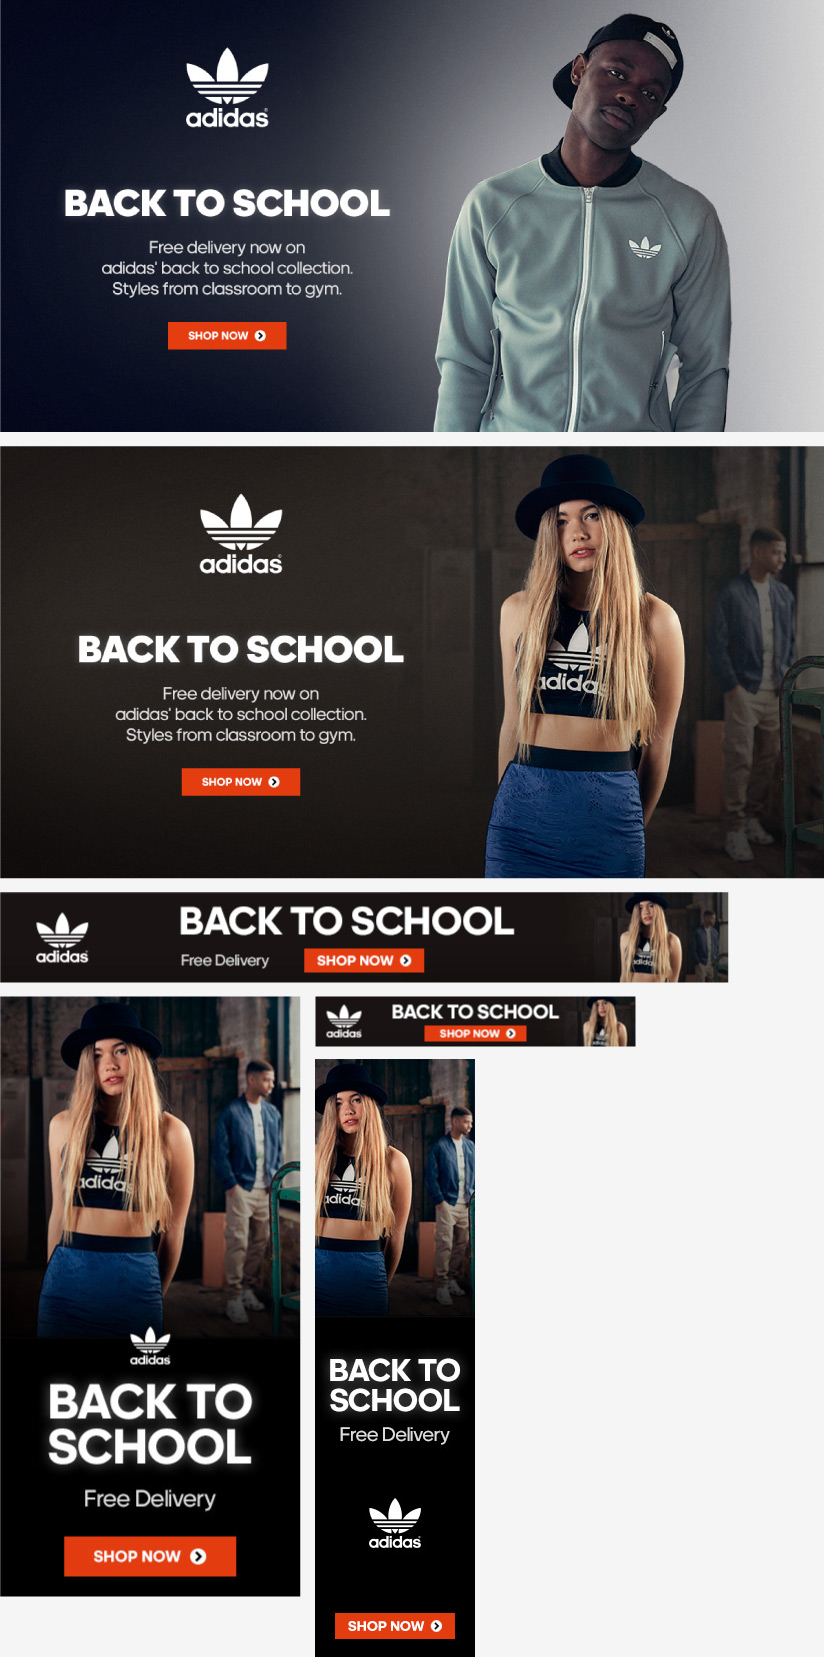 Adidas /  Back to School image 2